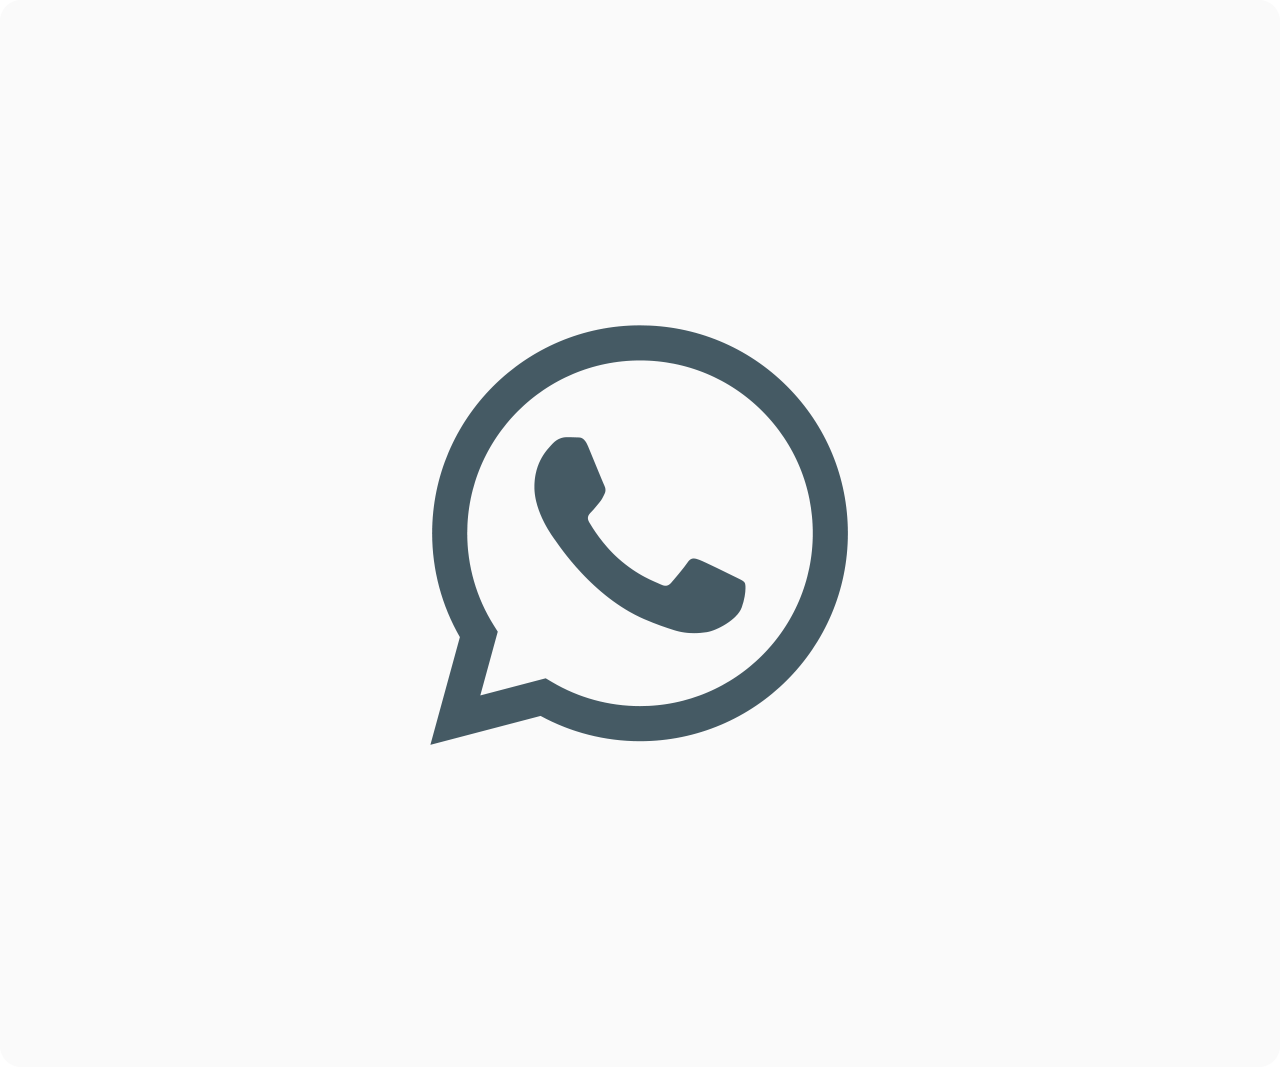 Small Phone Logo - WhatsApp Brand Resources